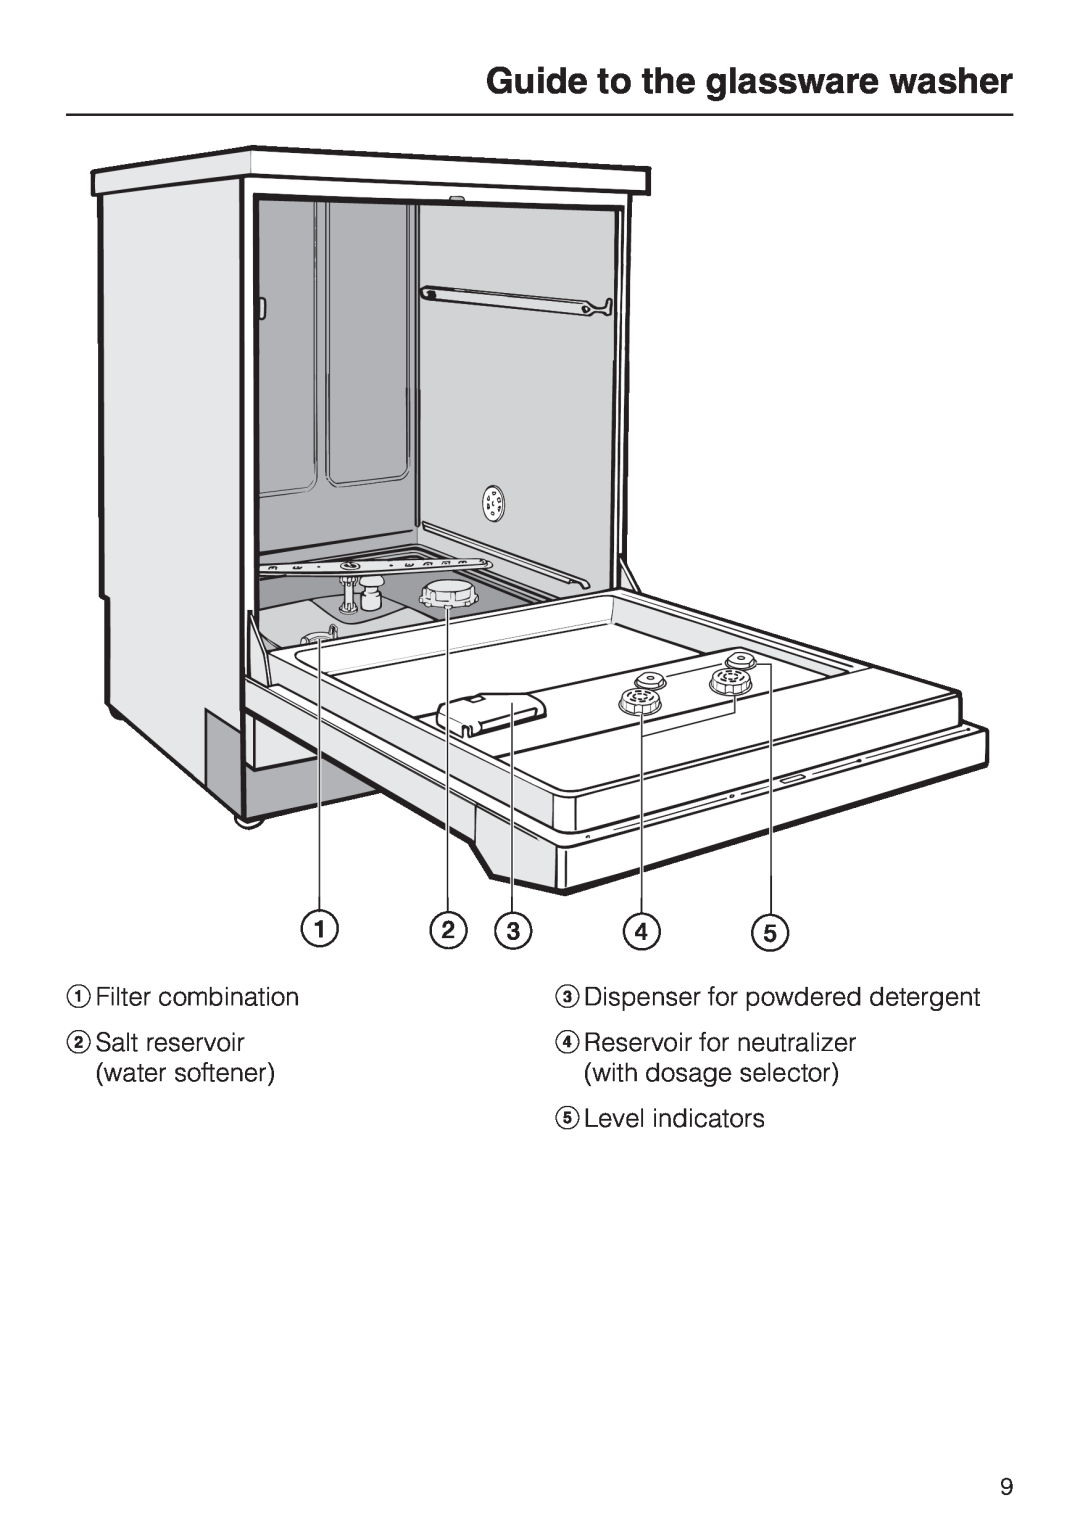 Miele G 7804 Guide to the glassware washer, aFilter combination, cDispenser for powdered detergent, bSalt reservoir 